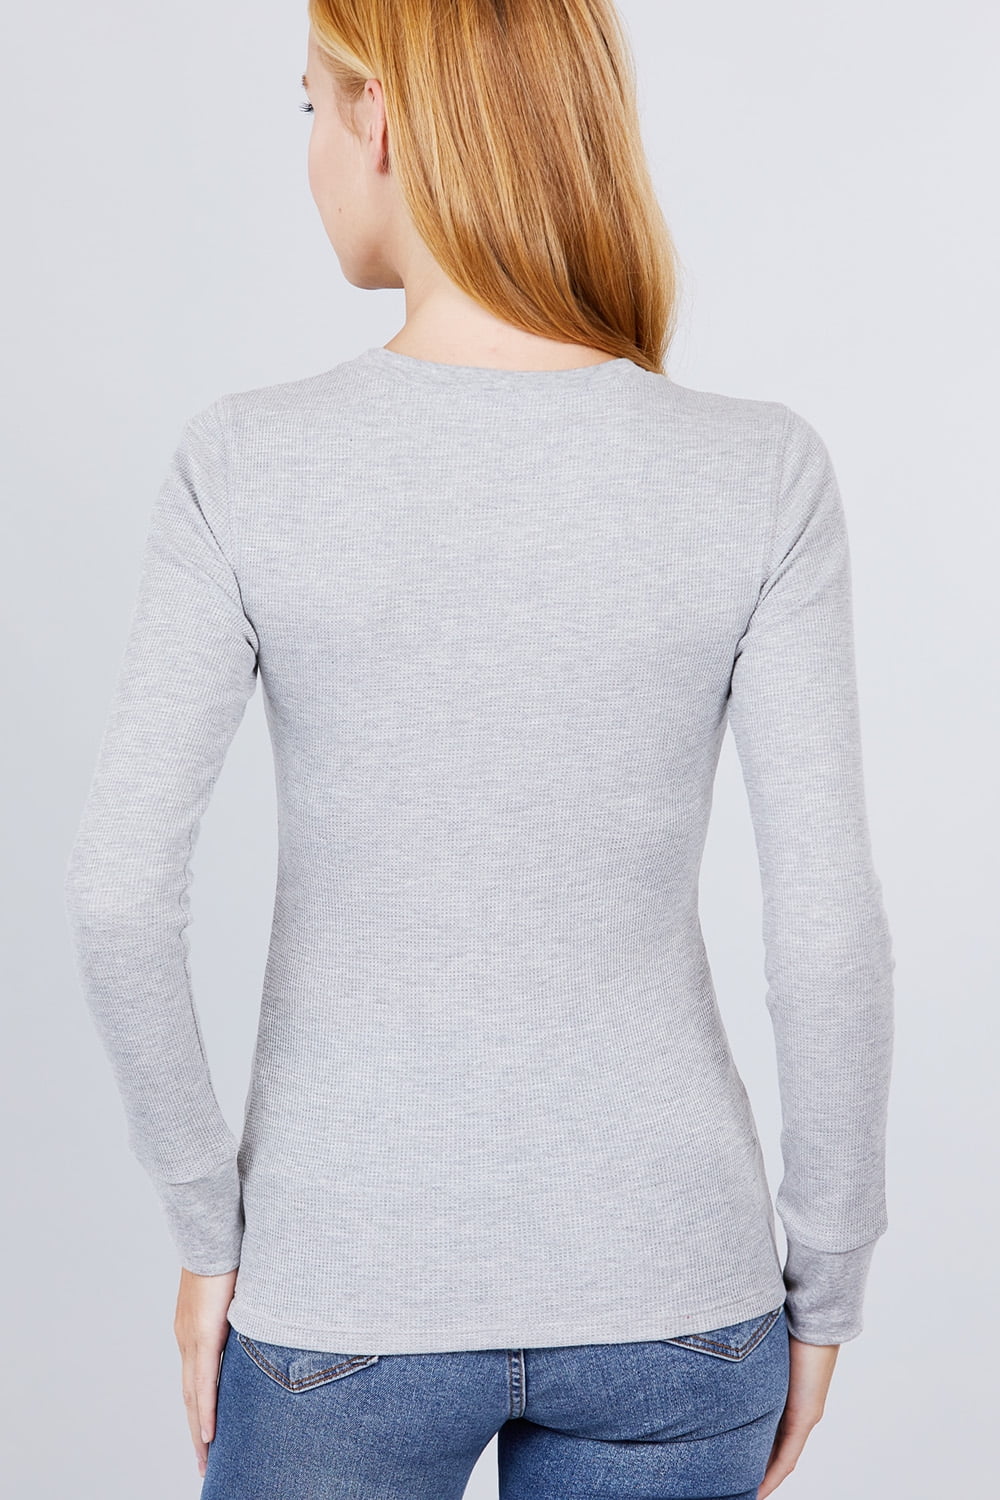 Women's Basic Thermal Long Sleeve Knit T-Shirt Crew Neck 